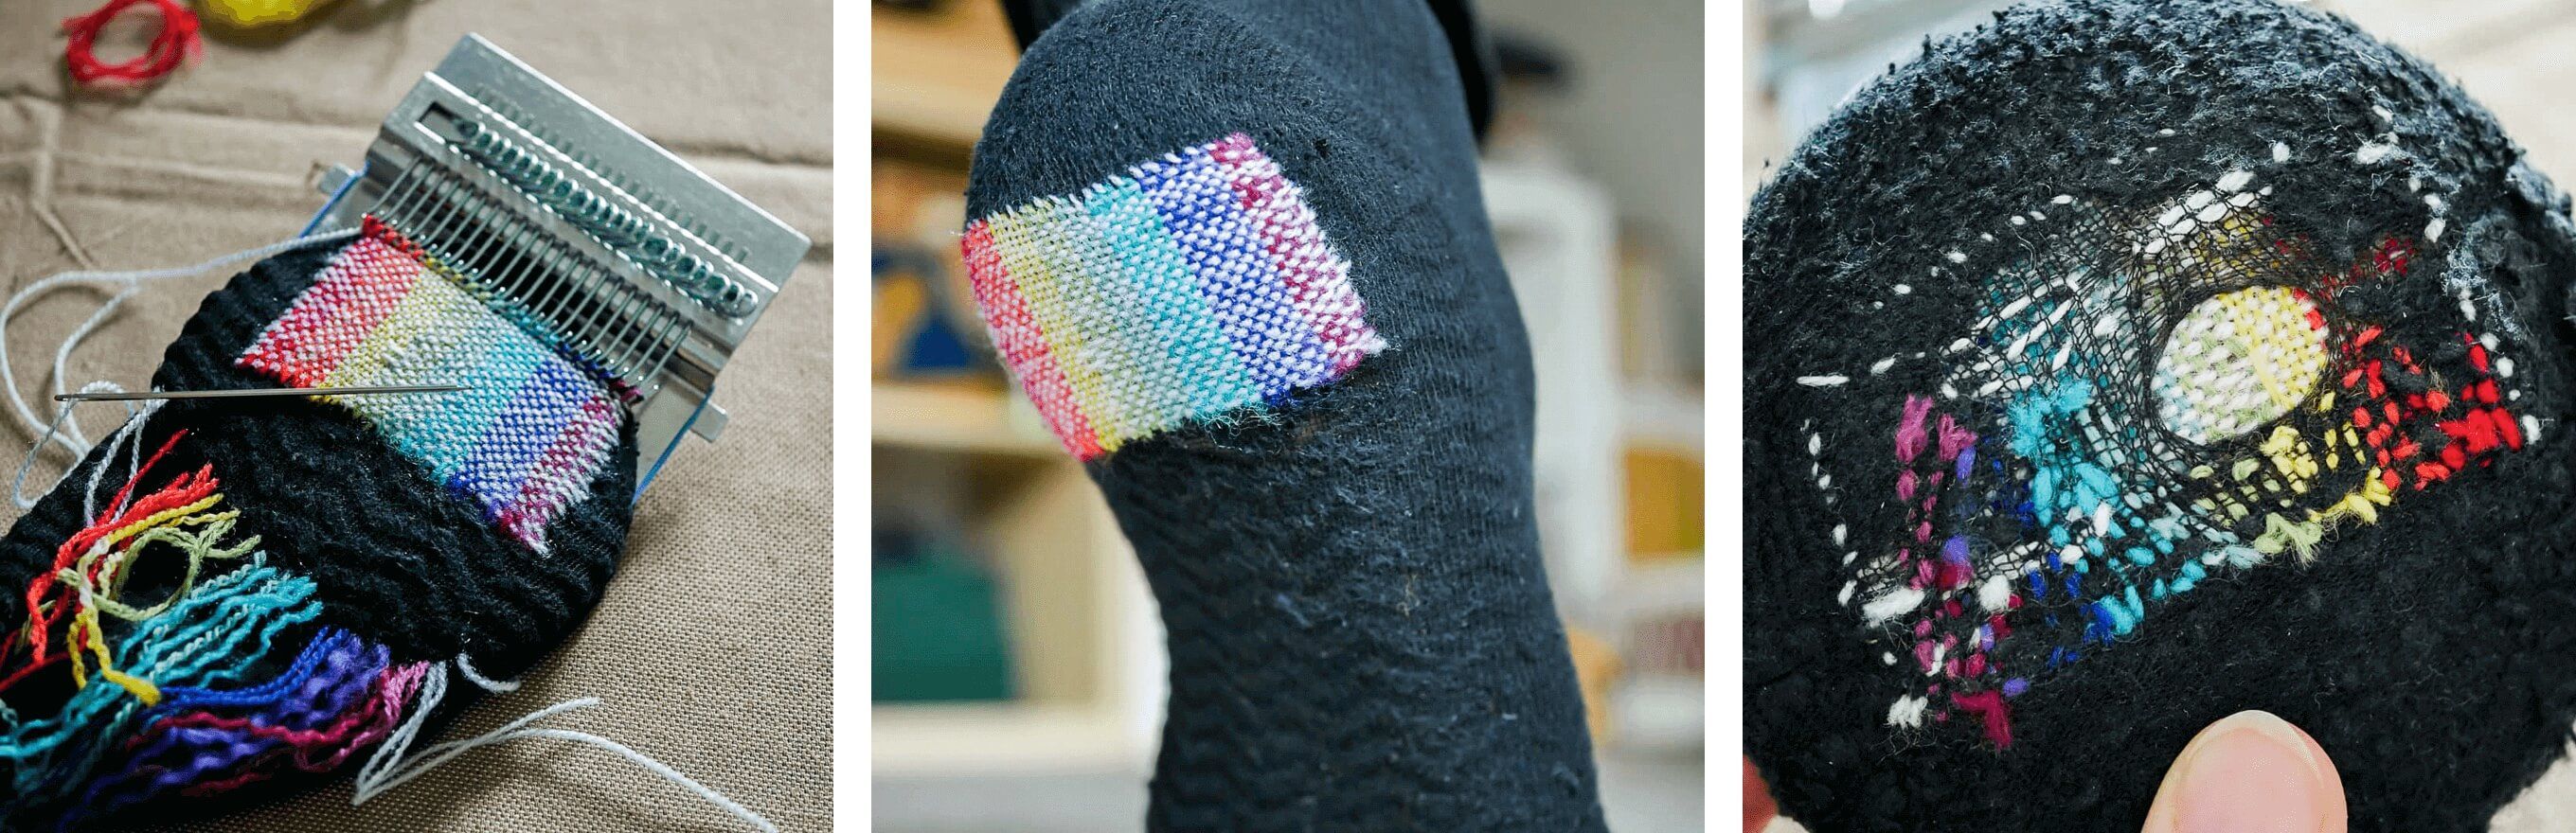 kaputte Socke mit Regenbogen-Muster reparieren